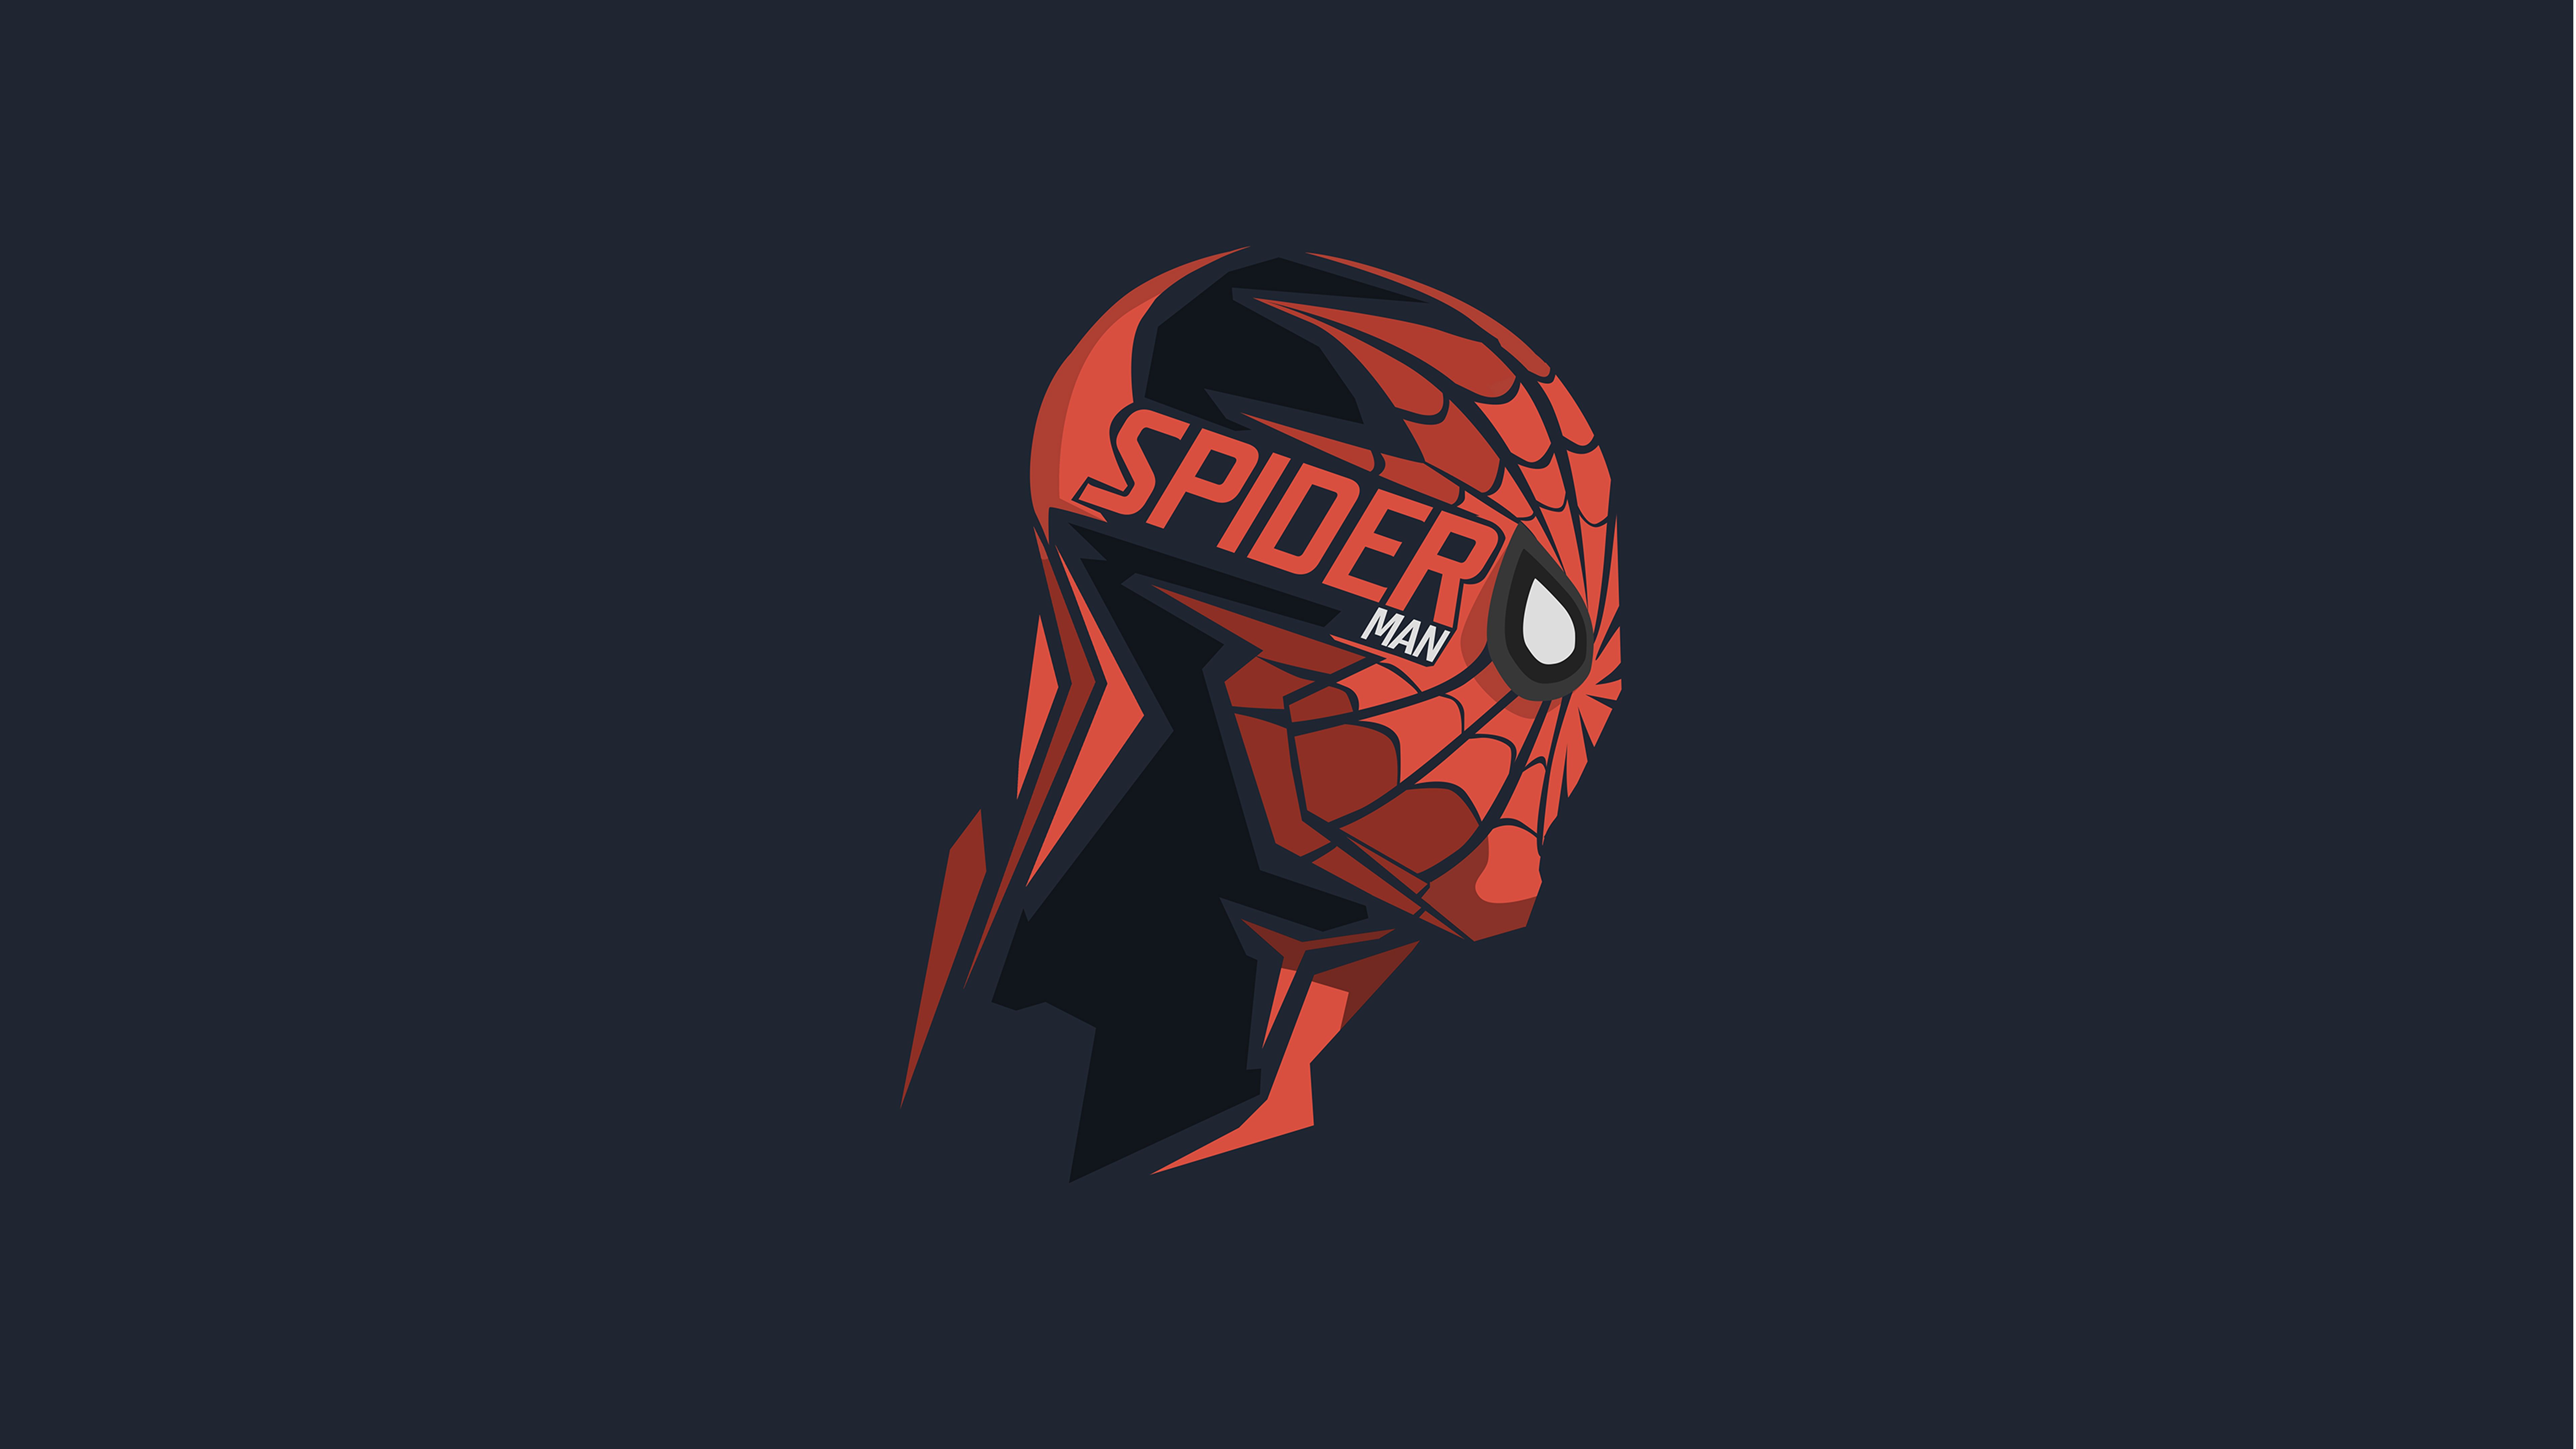 Spiderman Mask Minimalism 8k 5k HD 4k Wallpaper, Image